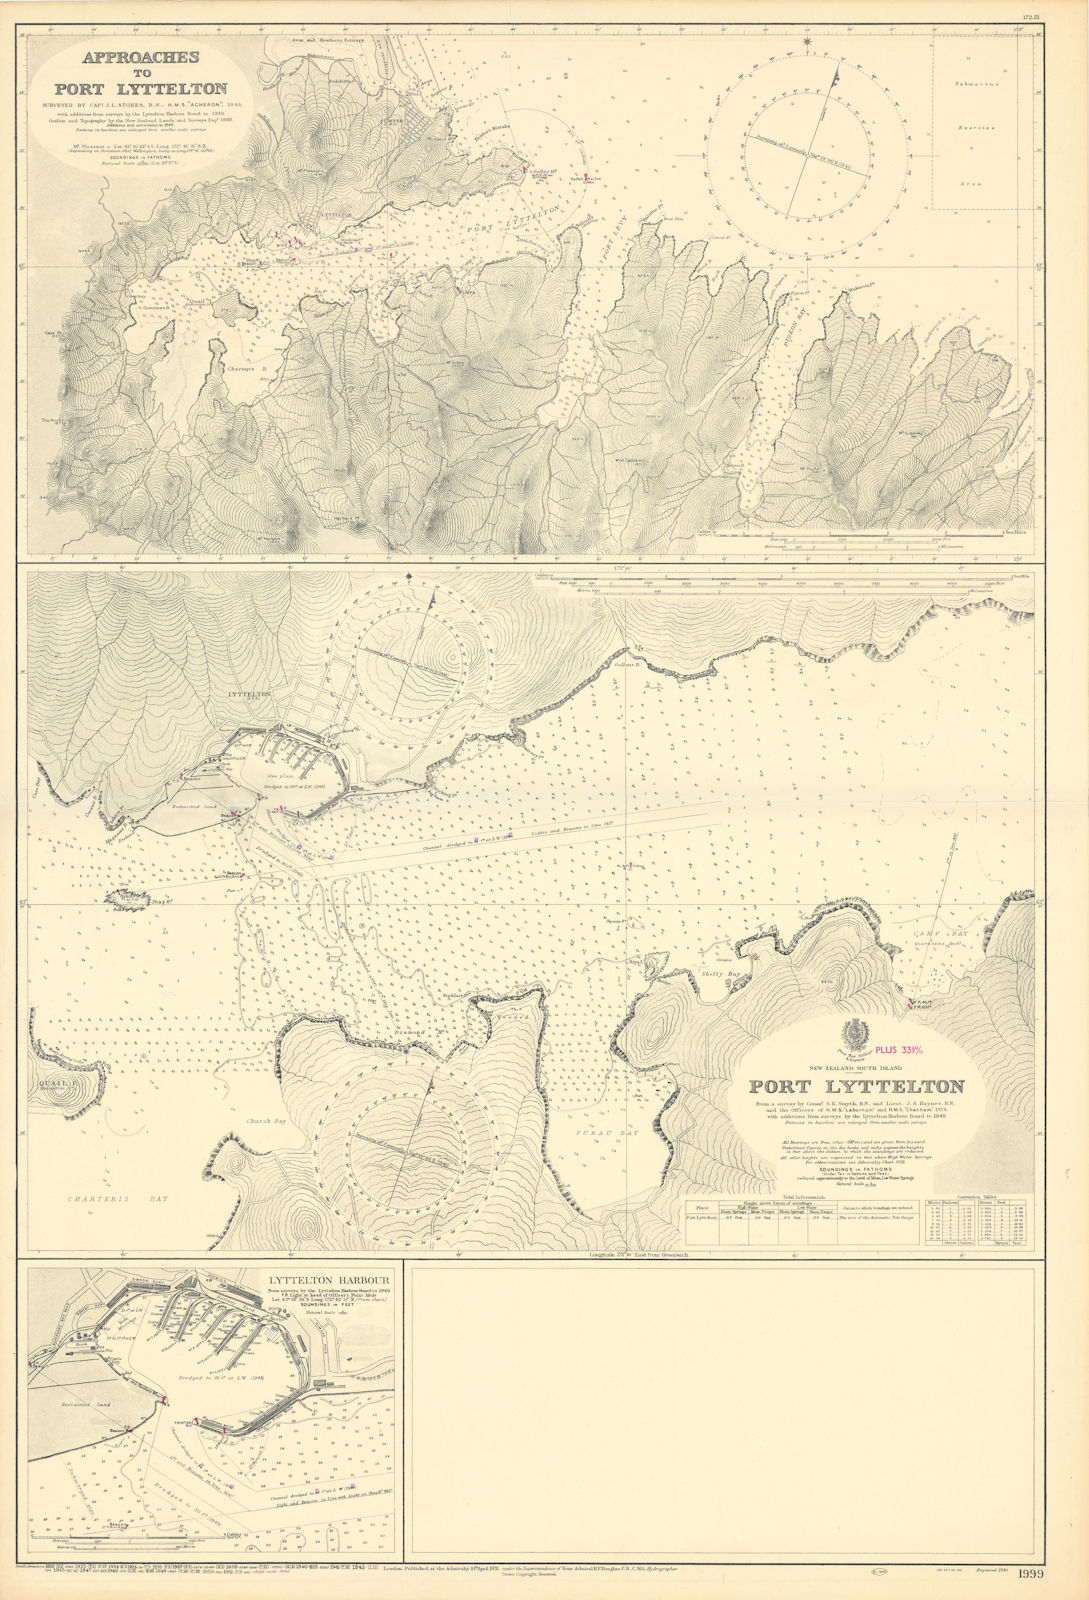 Port Lyttelton port New Zealand South Island ADMIRALTY sea chart 1931 (1955) map